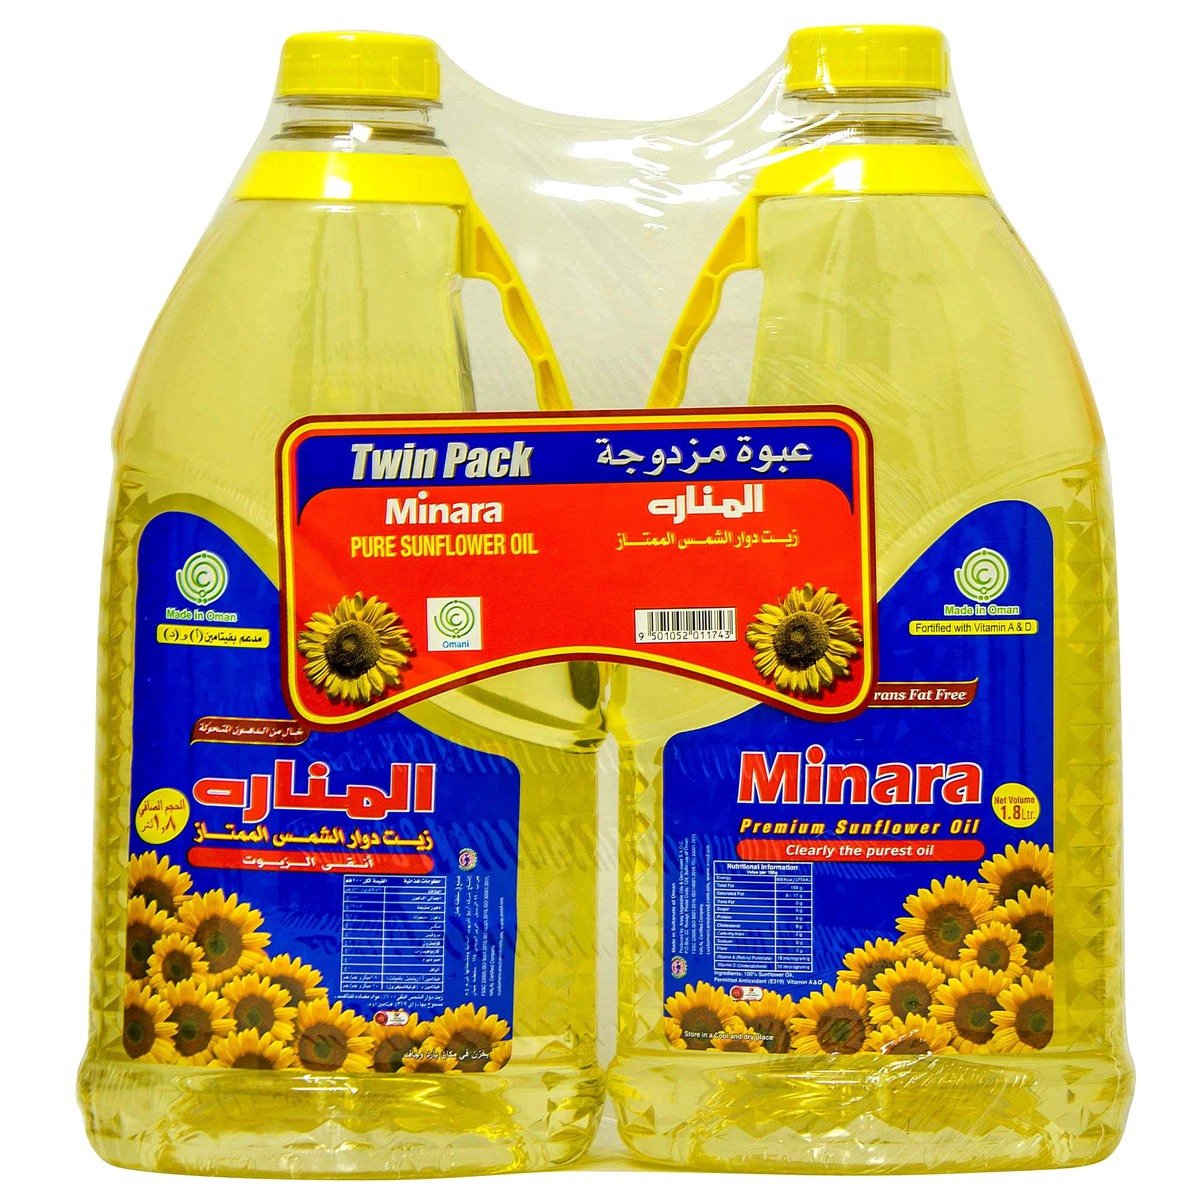 Minara Premium Sunflower Oil 2 x 1.8Litre